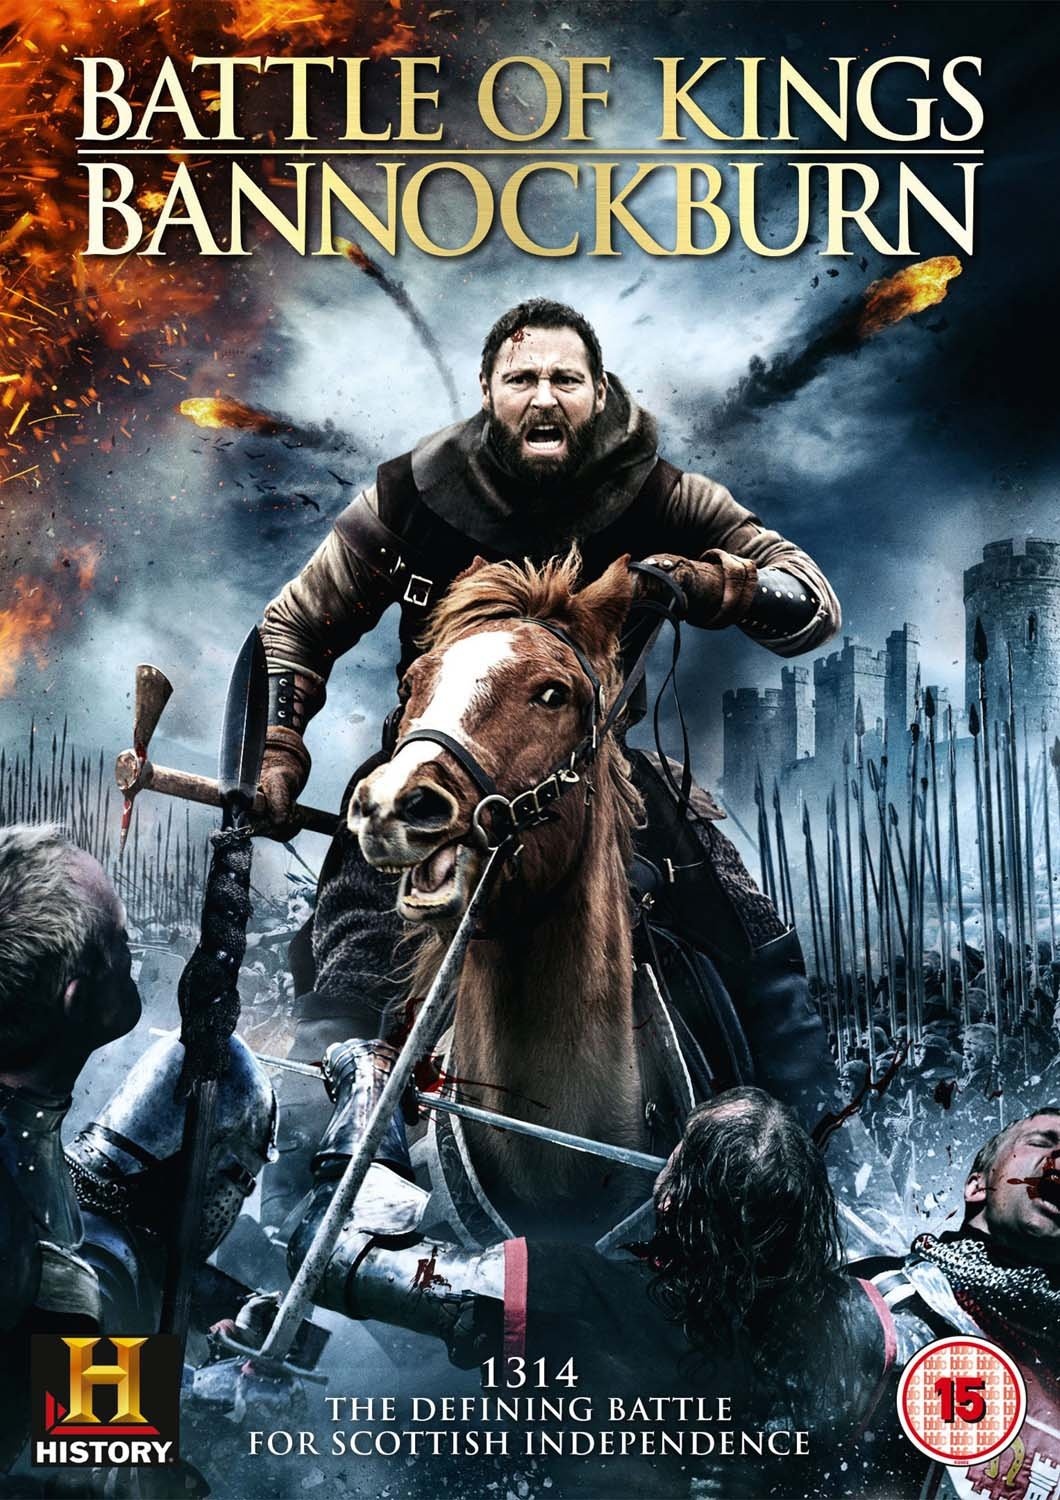 Battle of Kings: Bannockburn (The History Channel) [DVD] [UK Import]